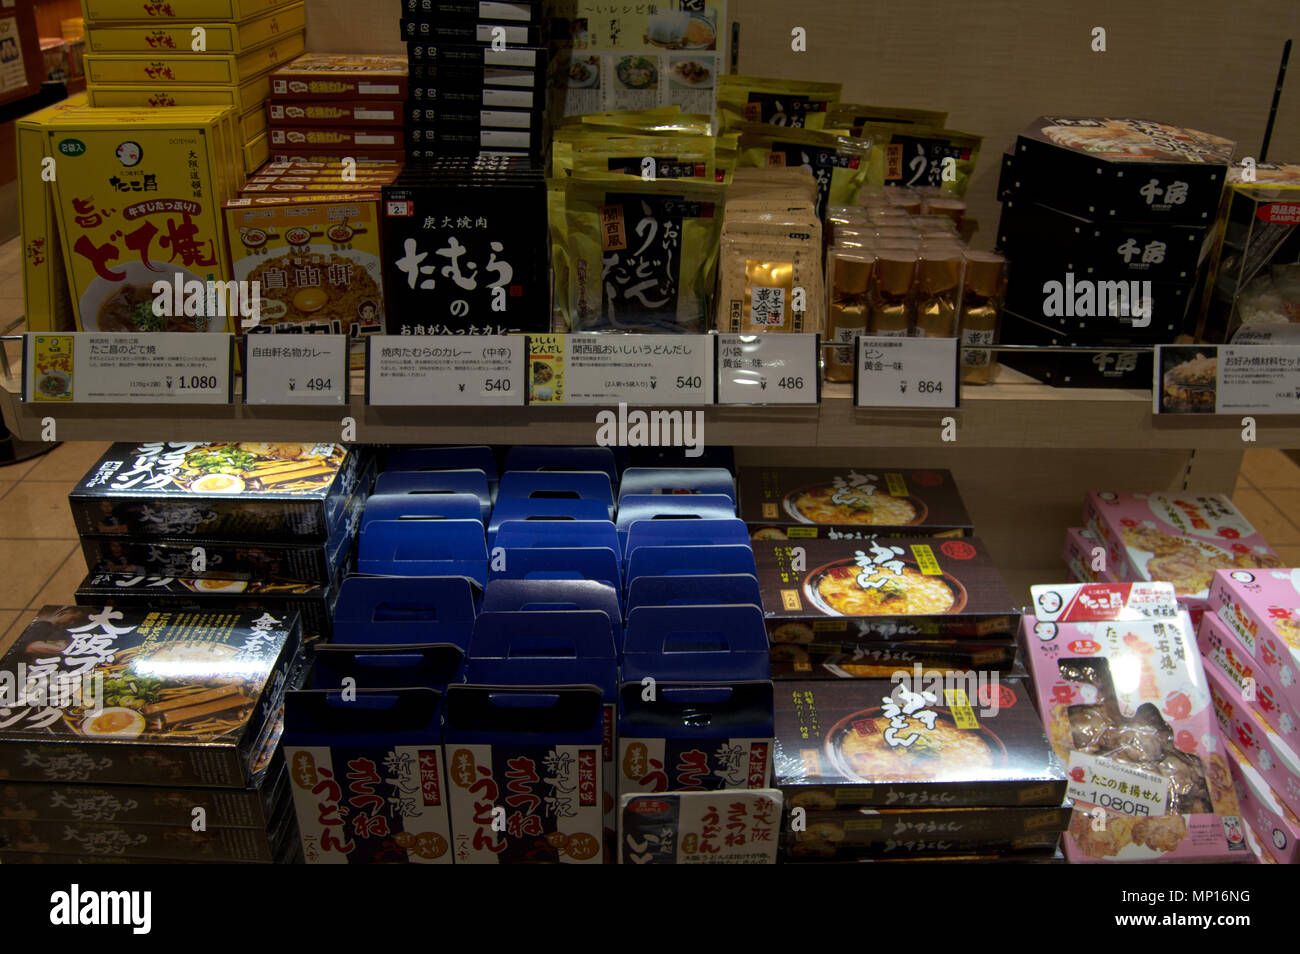 A selection of eki-ben (train bento boxes) at an eki-ben shop inside Shin-Osaka station, Japan Stock Photo